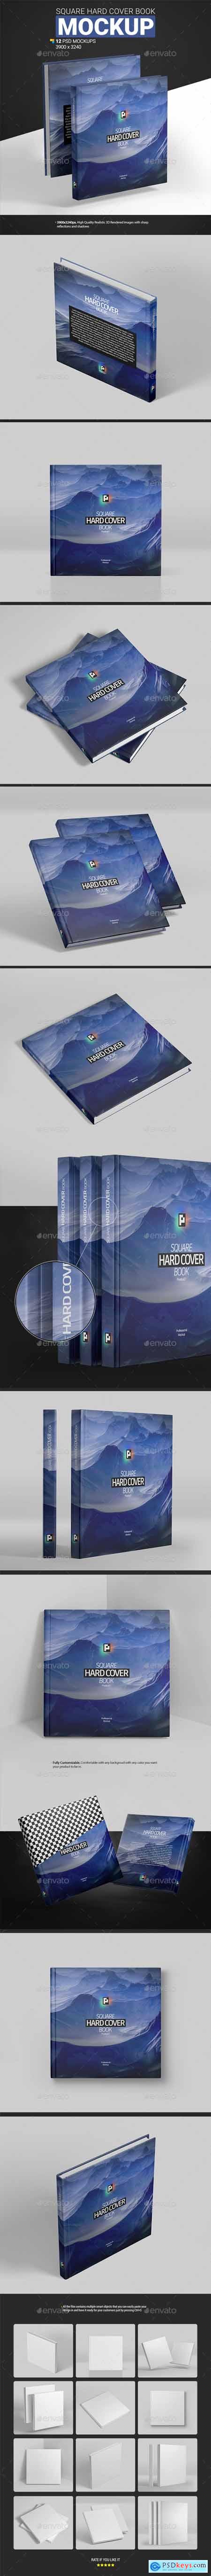 Square Hard Cover Book Mockup 30662468